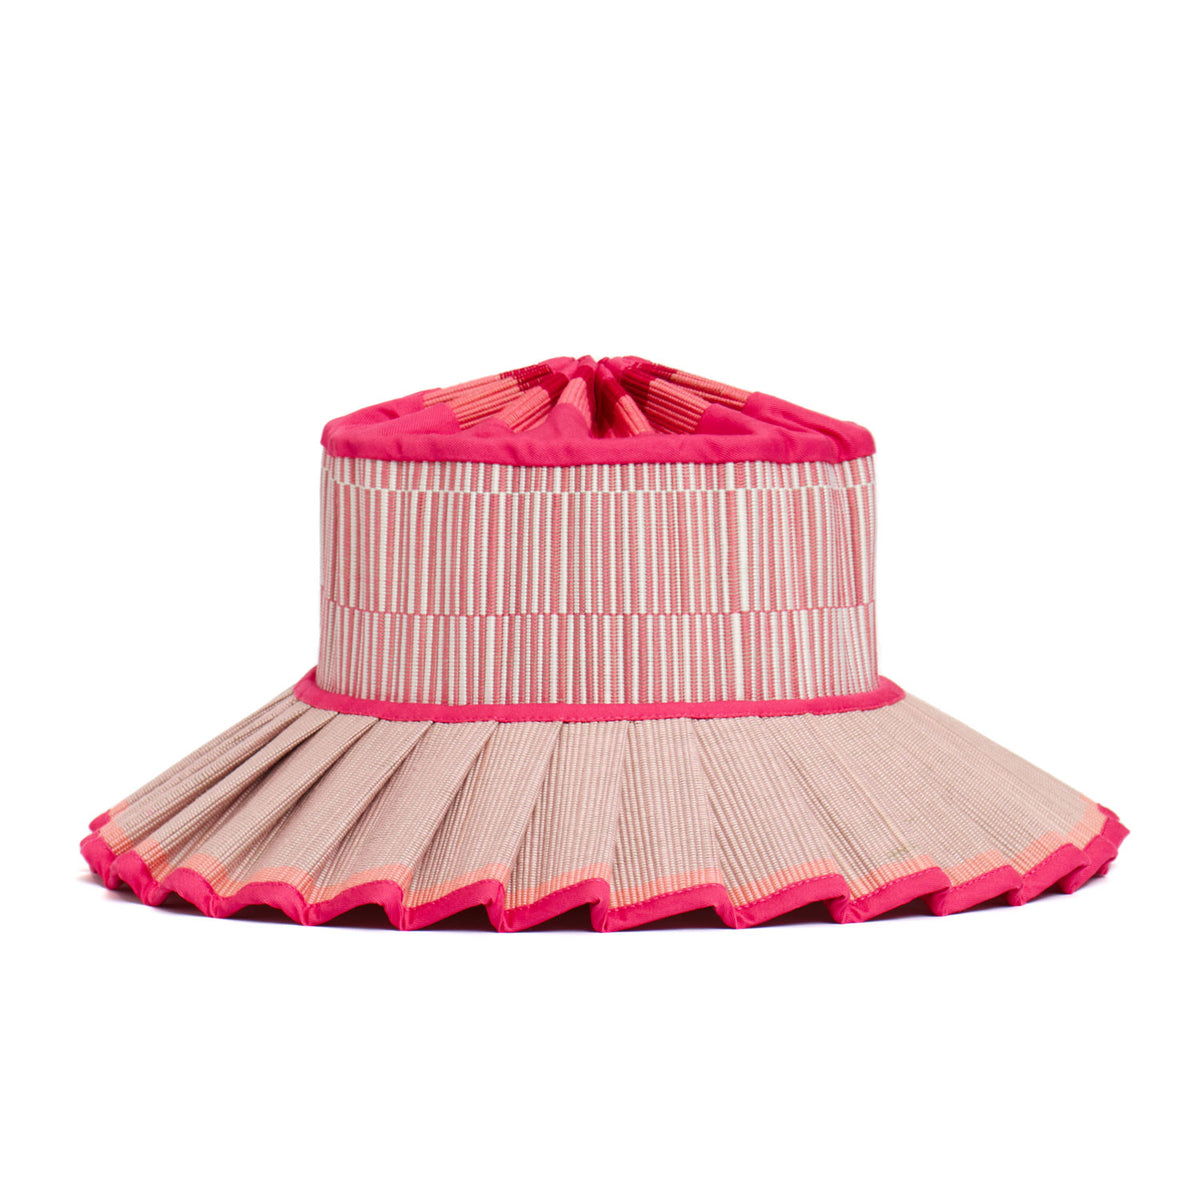 MG X Lorna Murray Capri Midi Hat Hot Pink – 100% Natural Grass